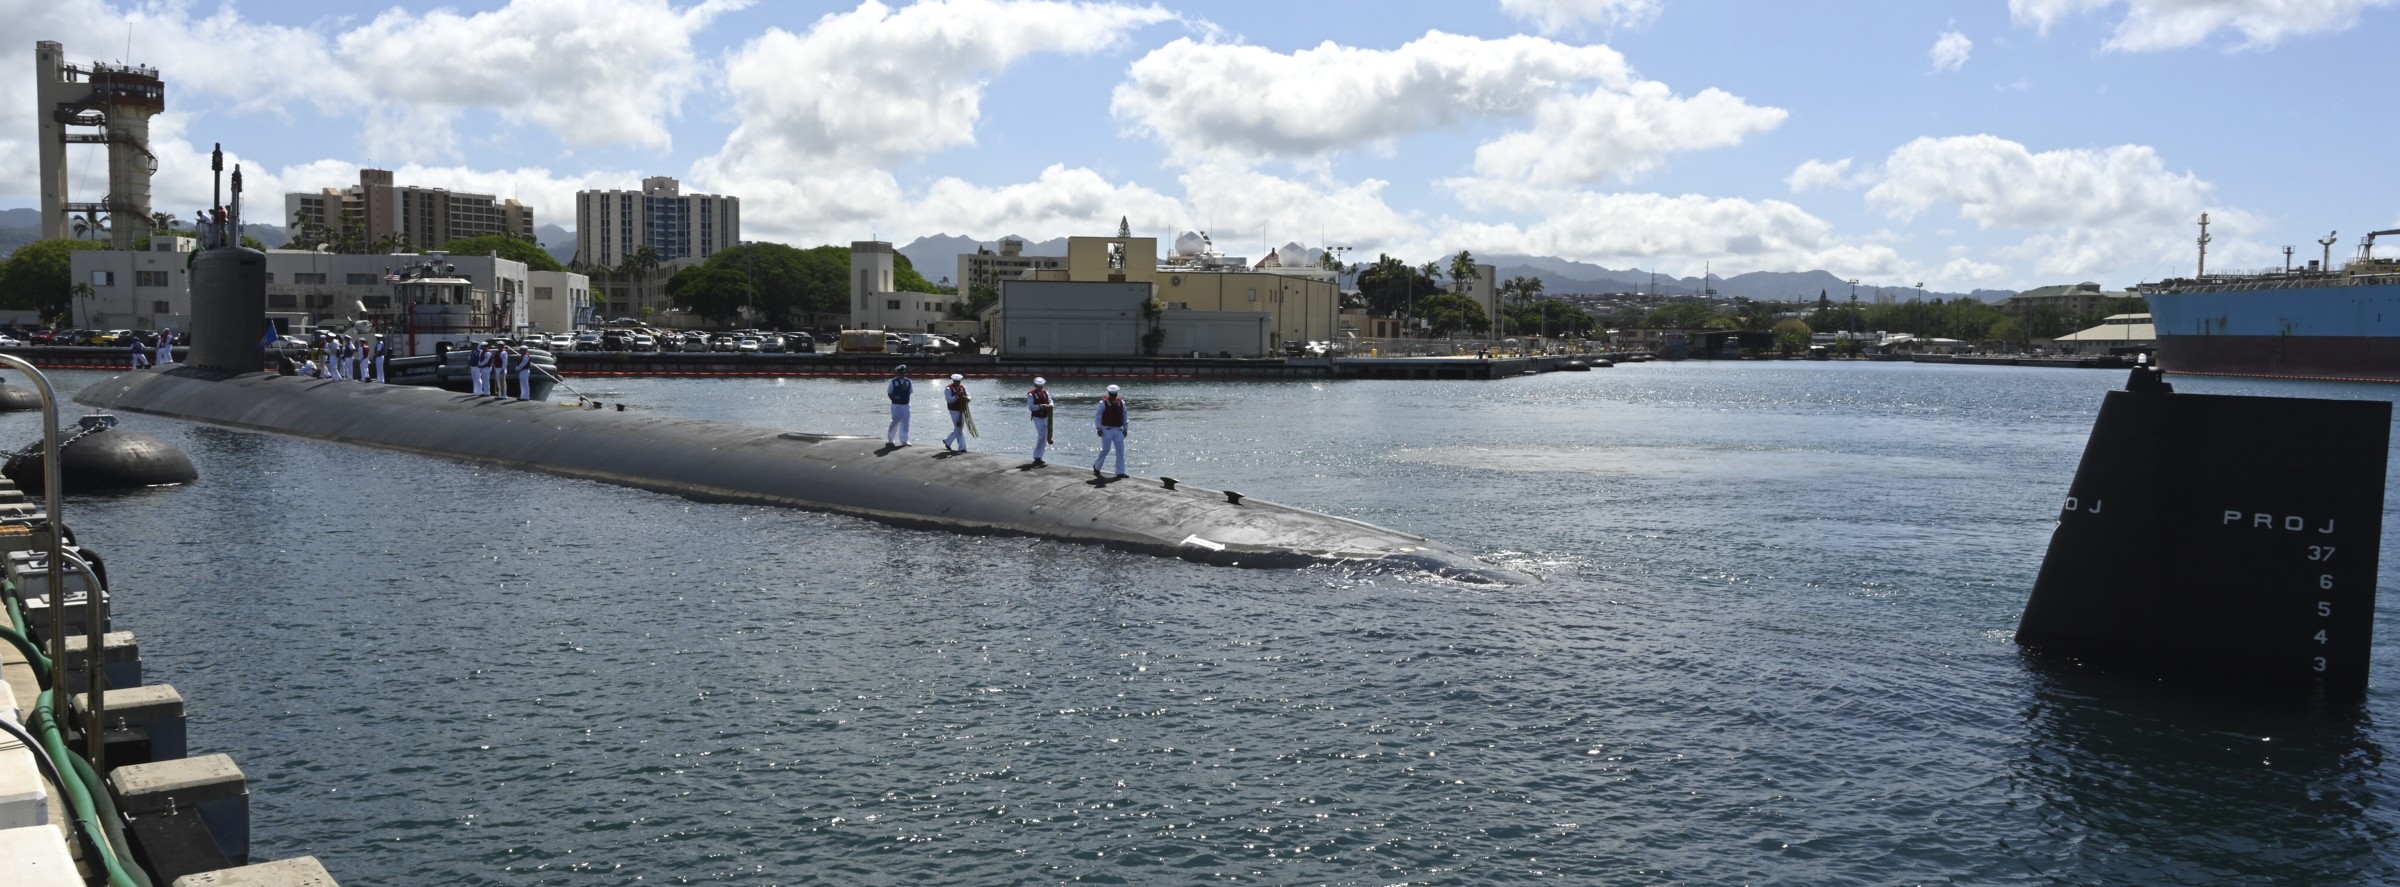 ssn-792 uss vermont virginia class attack submarine us navy pearl harbor hawaii 20